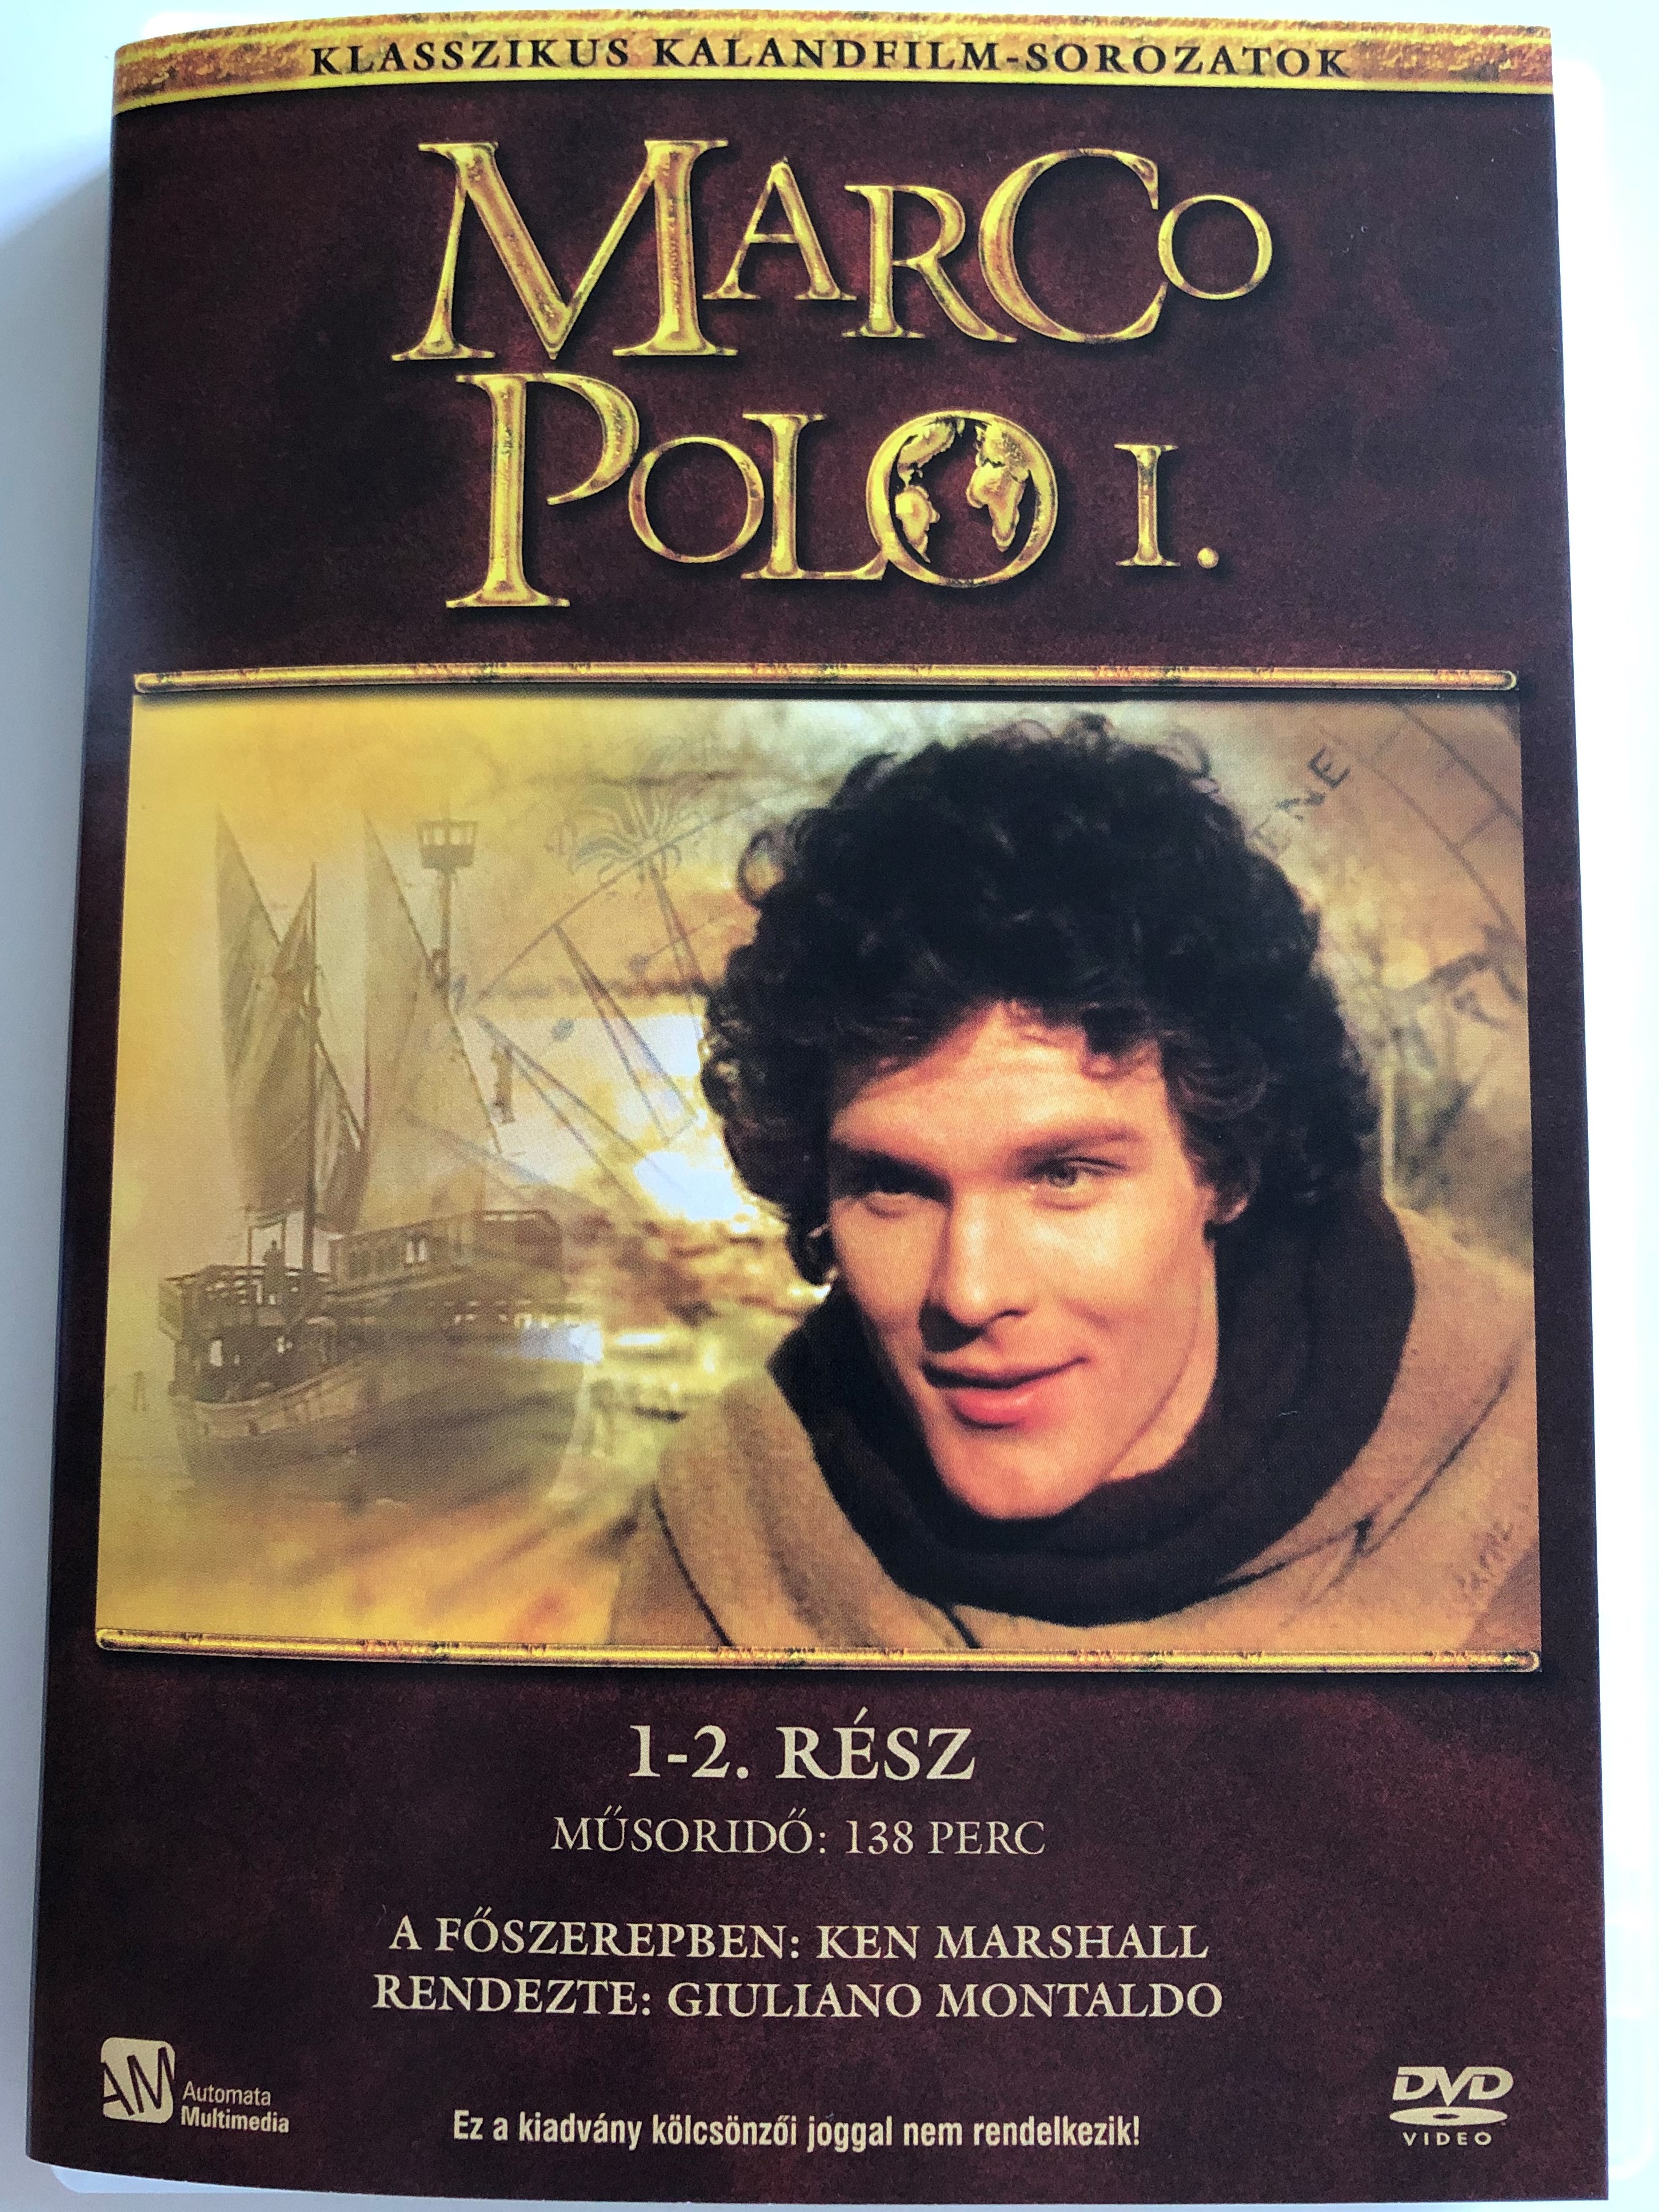 Marco Polo I. DVD 1982 / Directed by Giuliano Montaldo / Starring: Ken  Marshall, Den Holm Eliott, Tony Vogel, Ying Ruo Cheng / Episodes 1-2. -  bibleinmylanguage